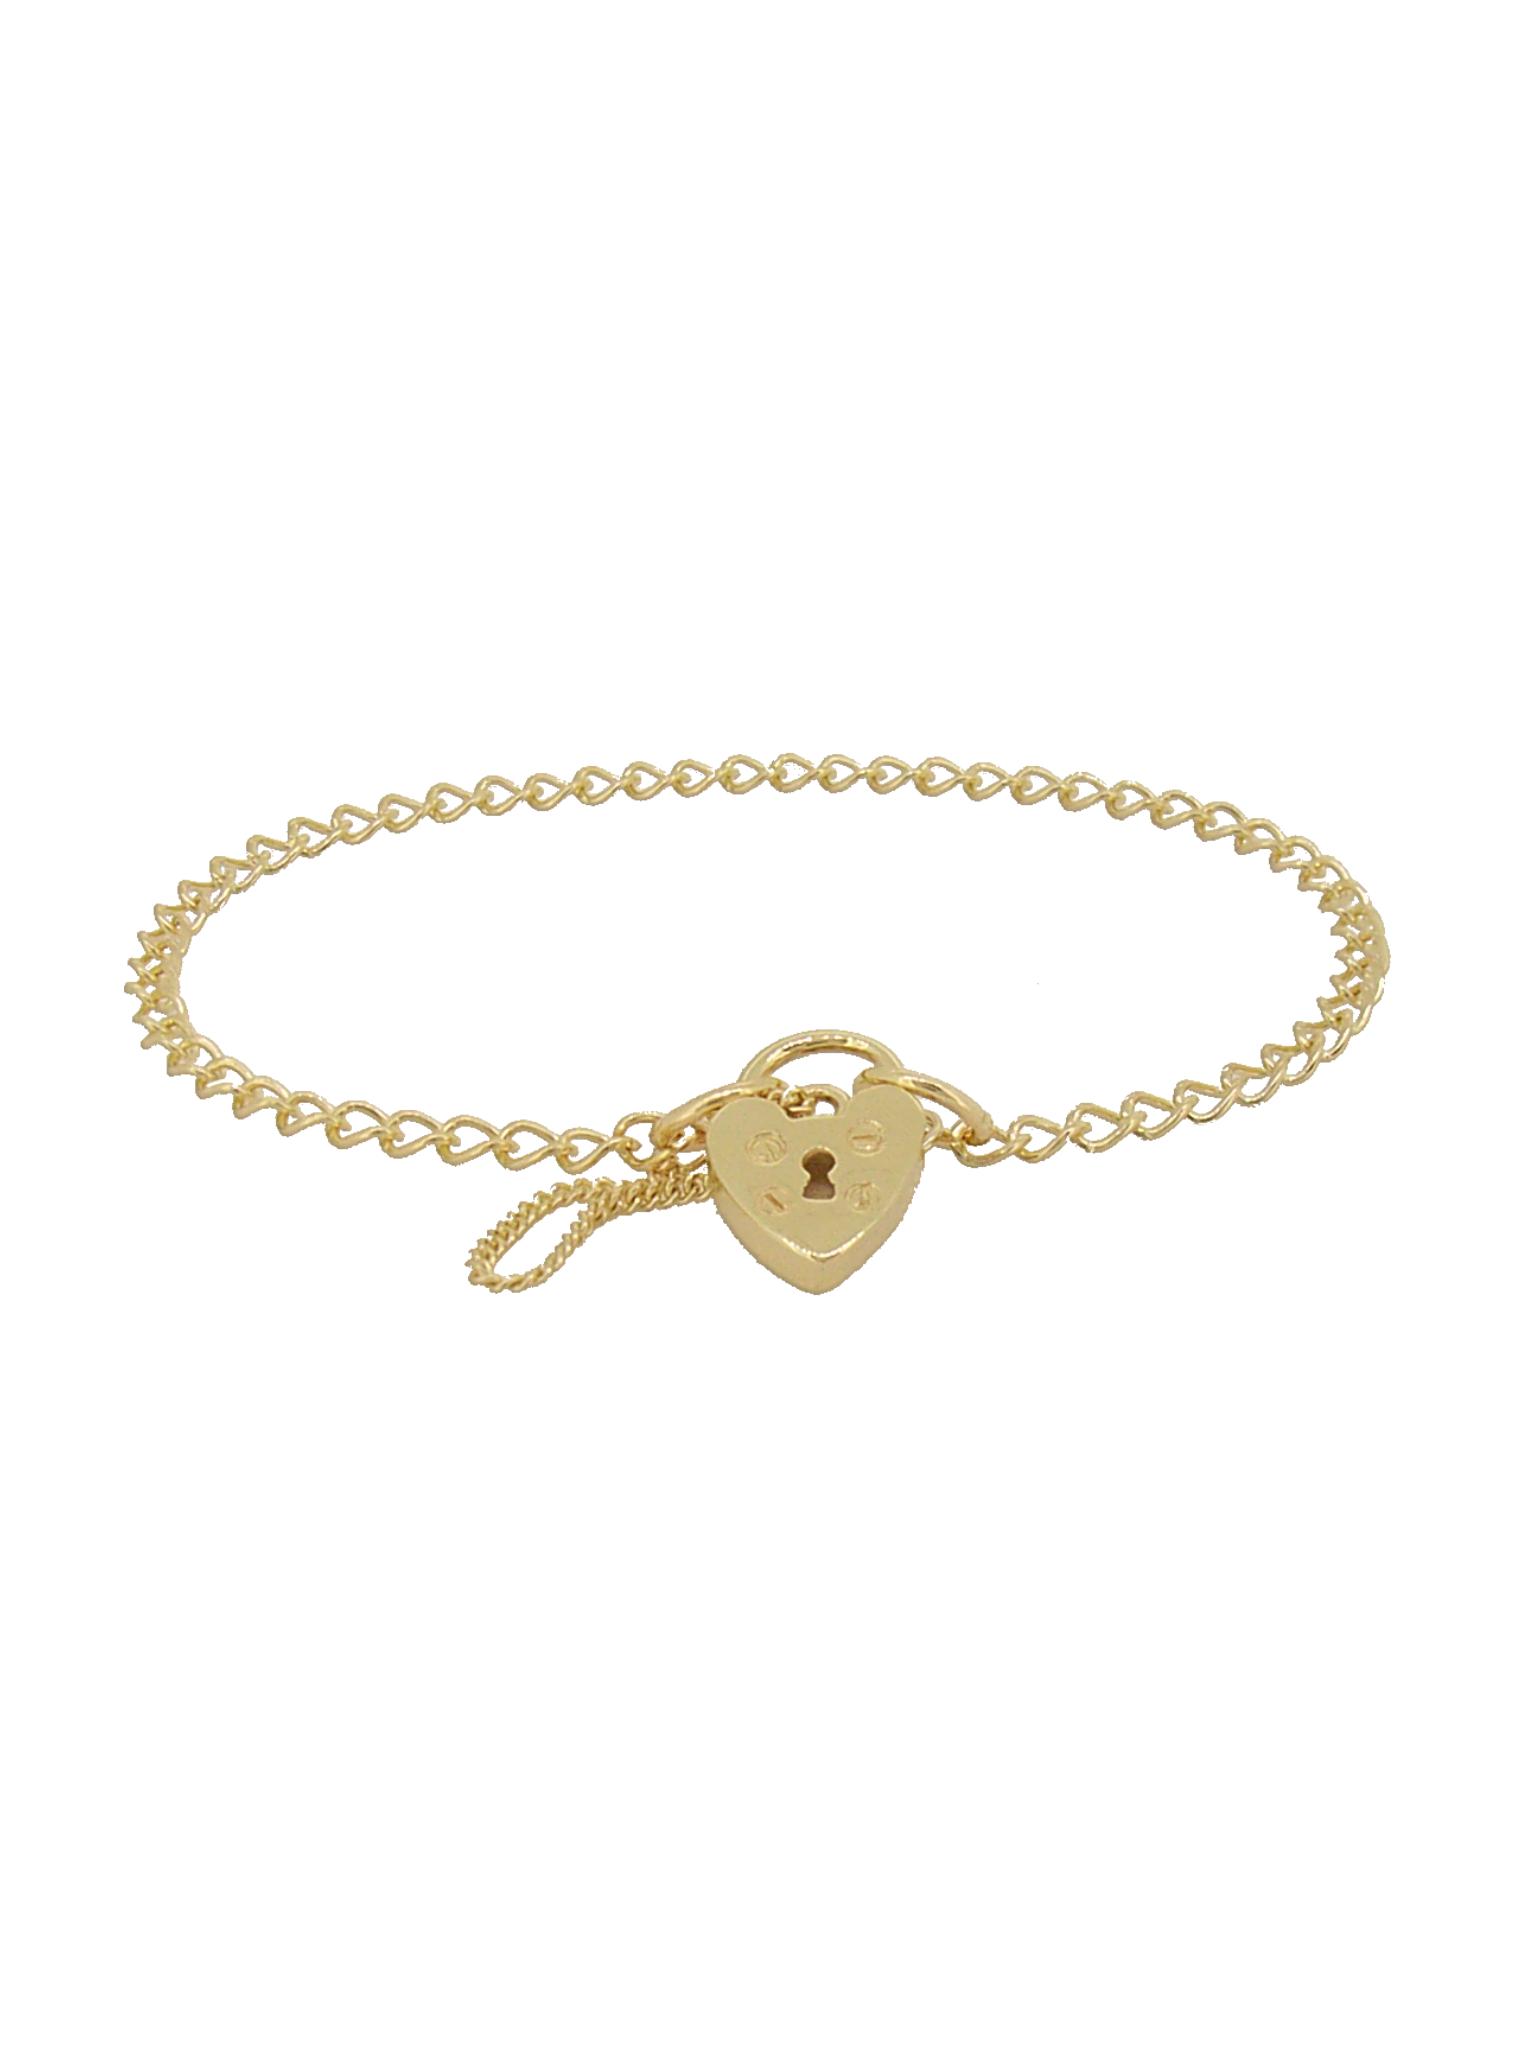 14k Solid Gold Baby Bracelet With Angel Charm / Adjustable 